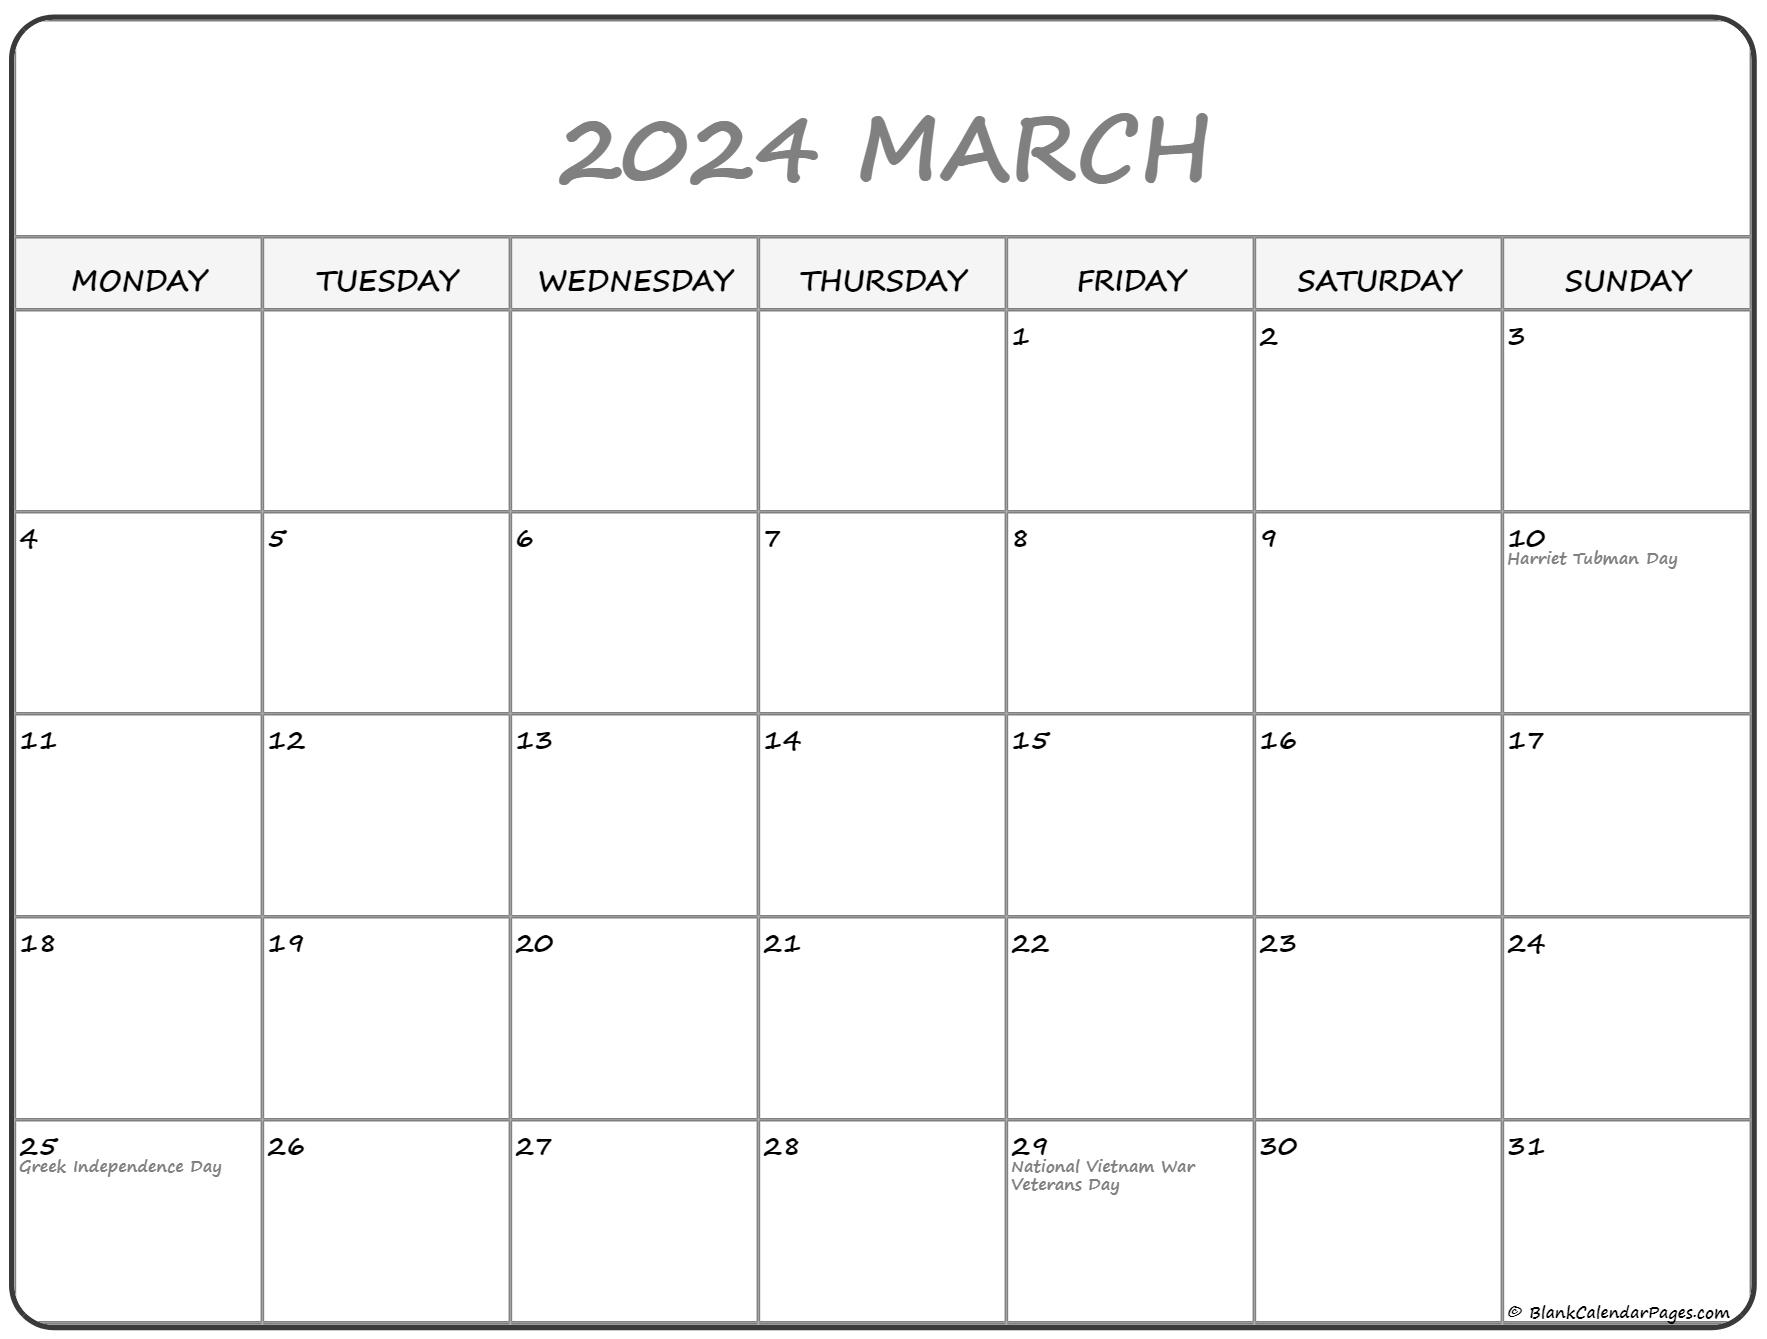 March 2023 Monday Calendar | Monday to Sunday